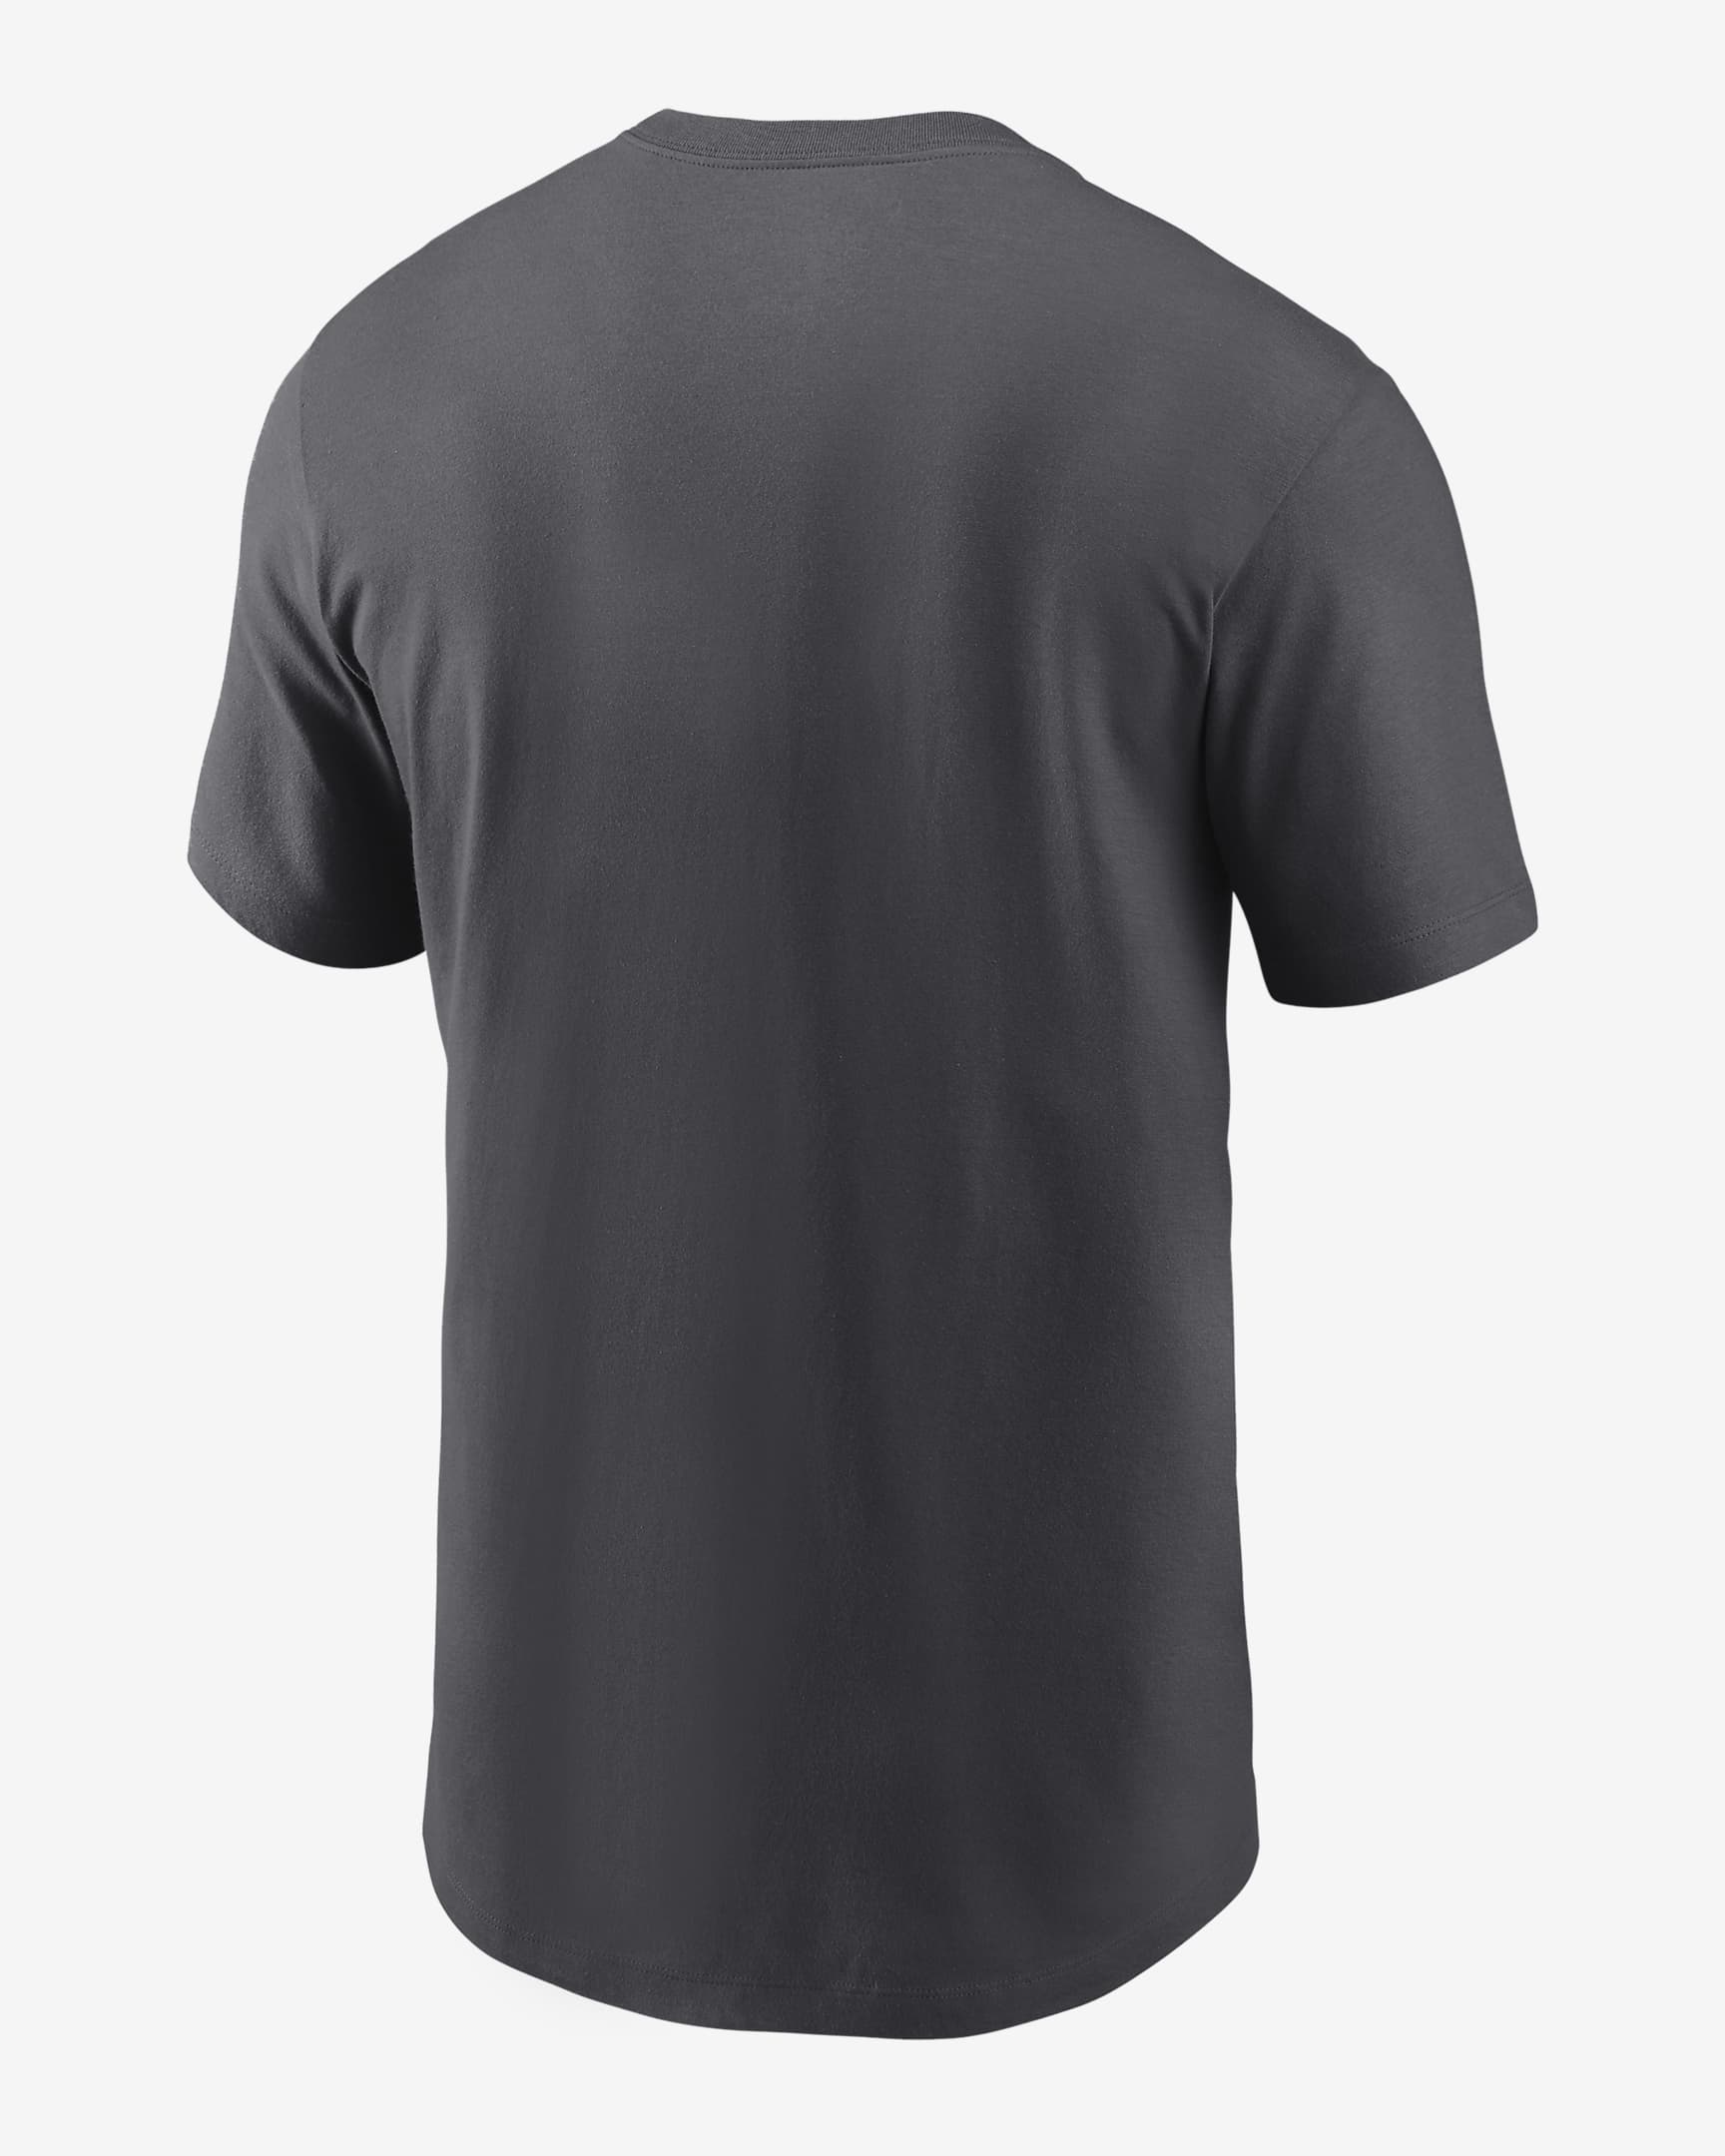 Nike City Connect Wordmark (MLB Baltimore Orioles) Men's T-Shirt. Nike.com